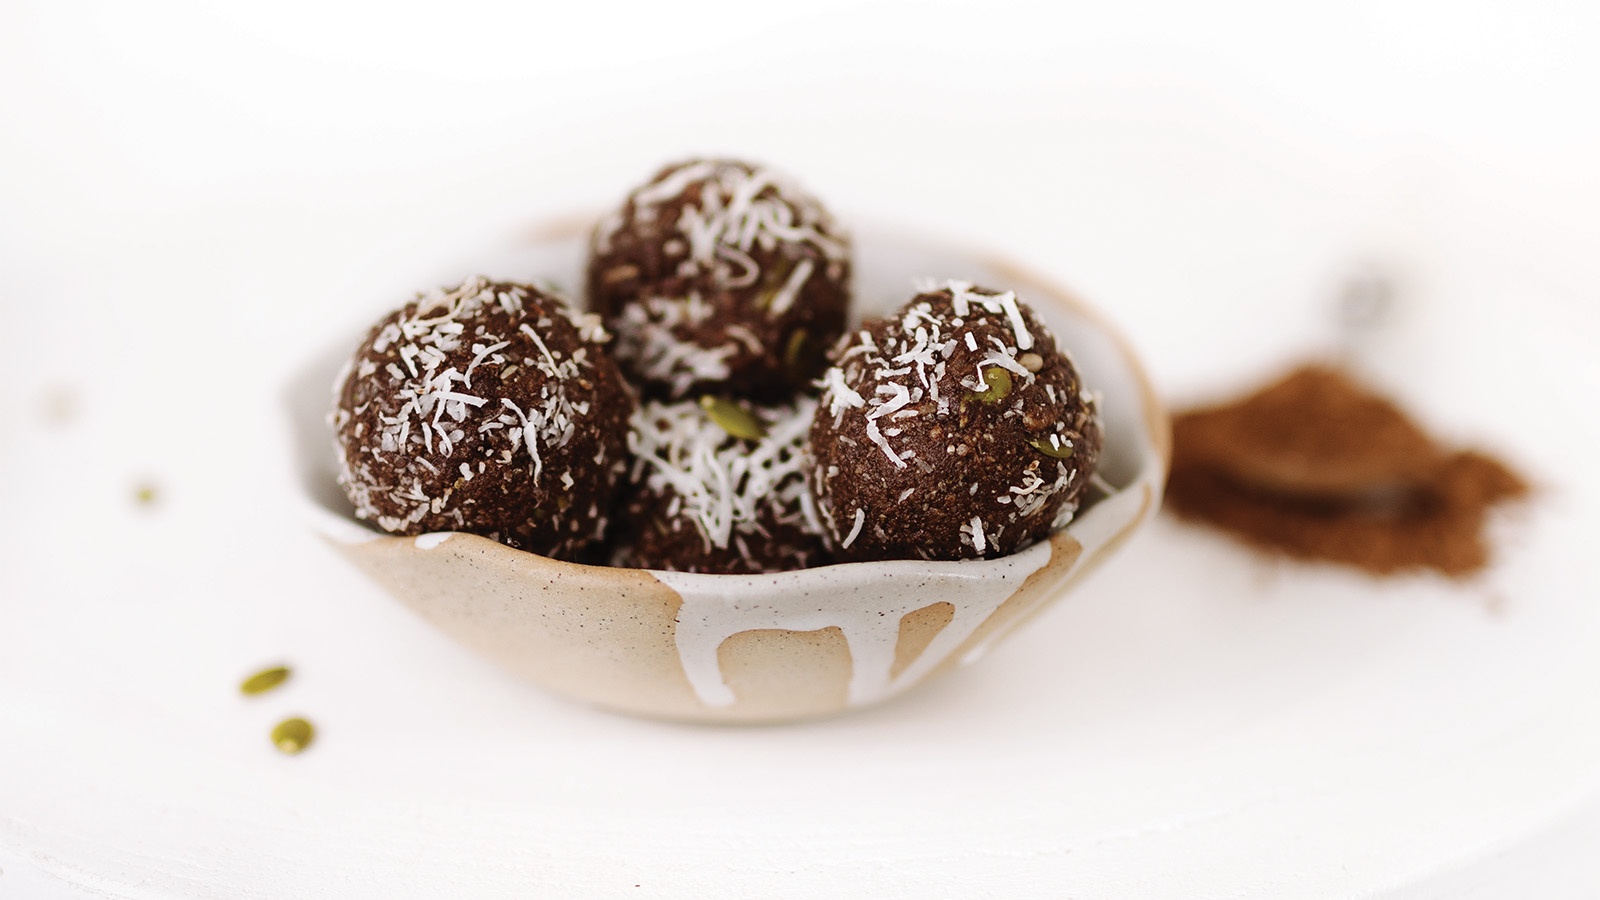 Nut-free chocolate bliss balls